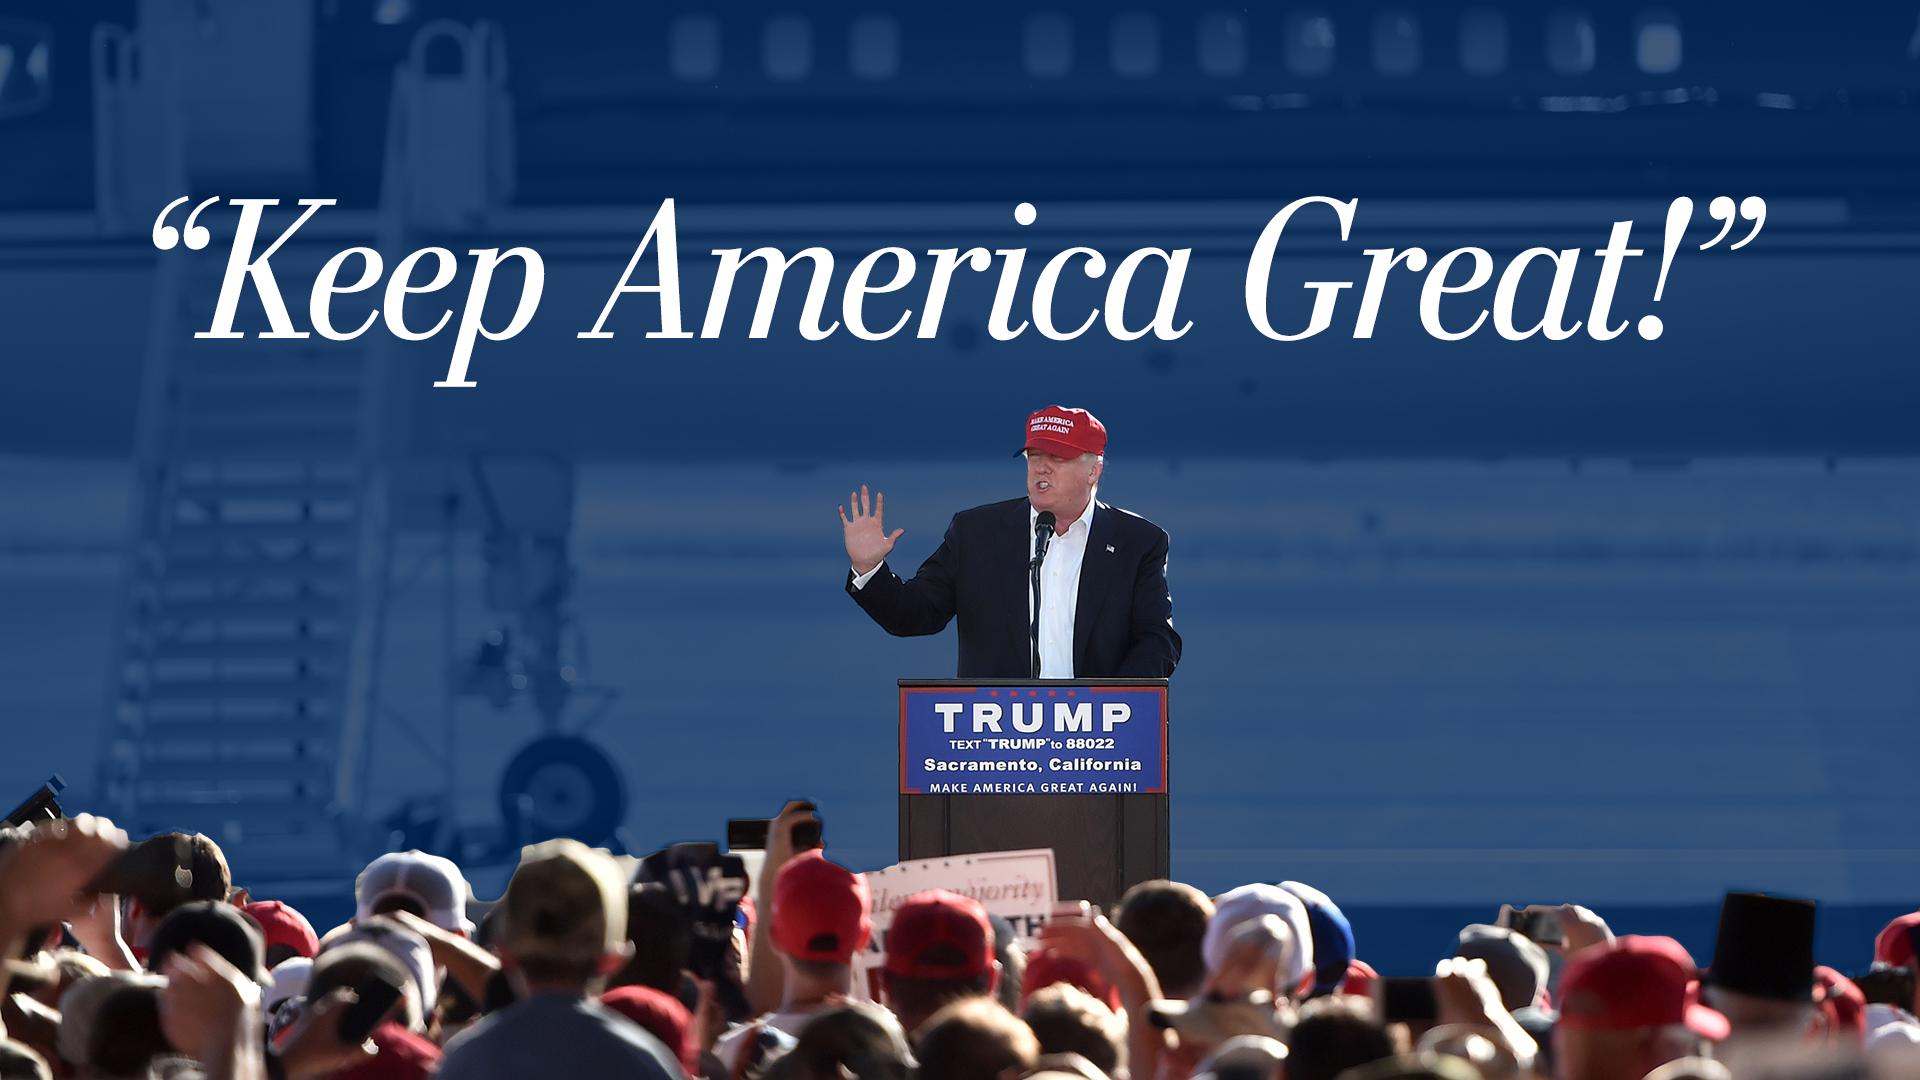 Trump 2020 Wallpaper Download